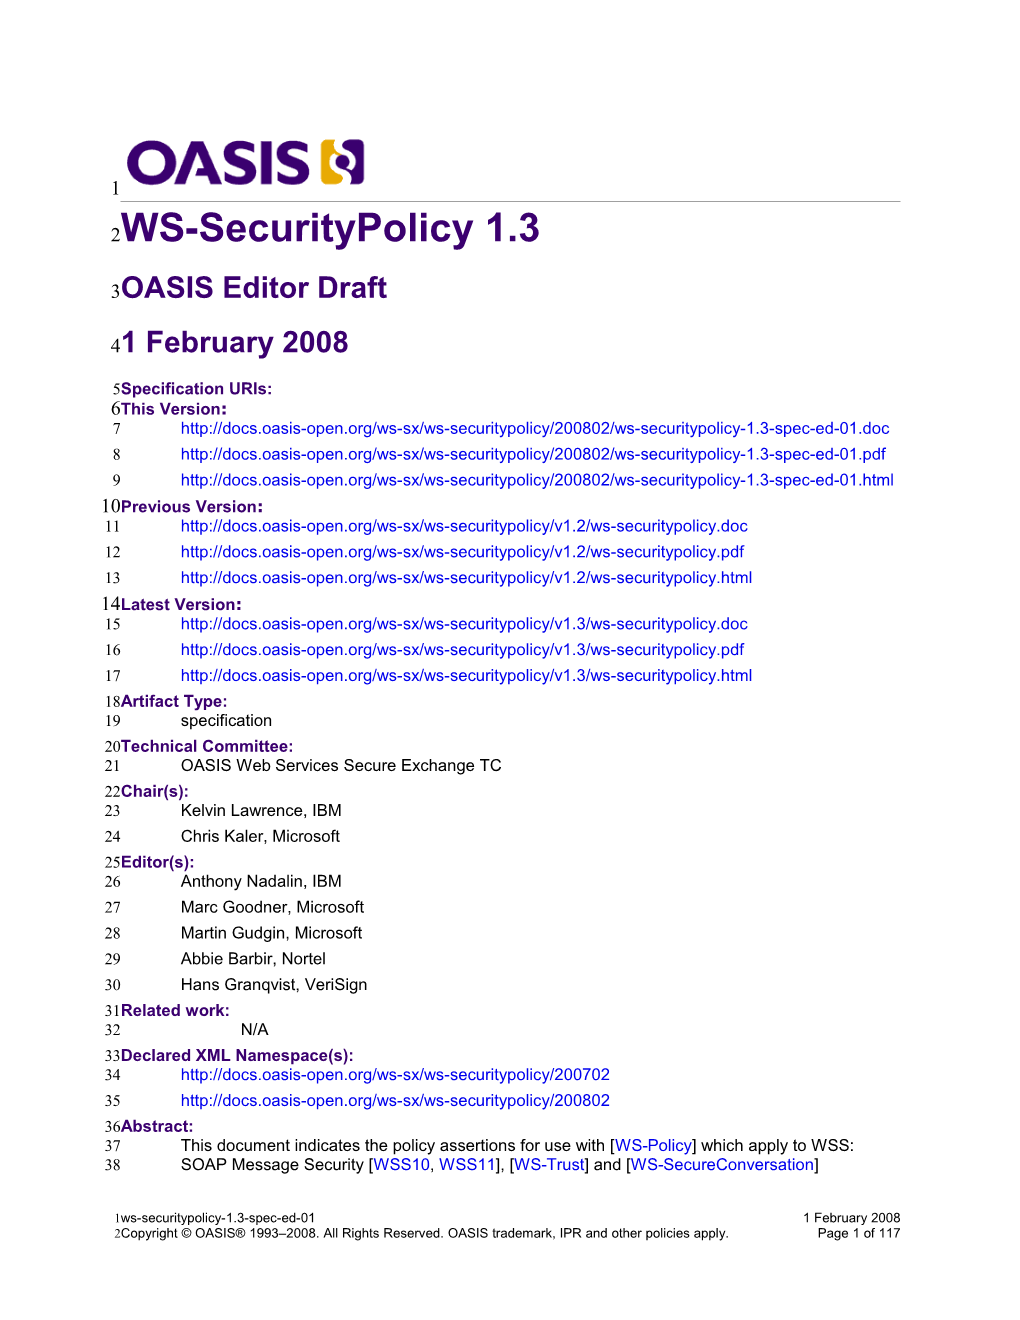 OASIS Editor Draft